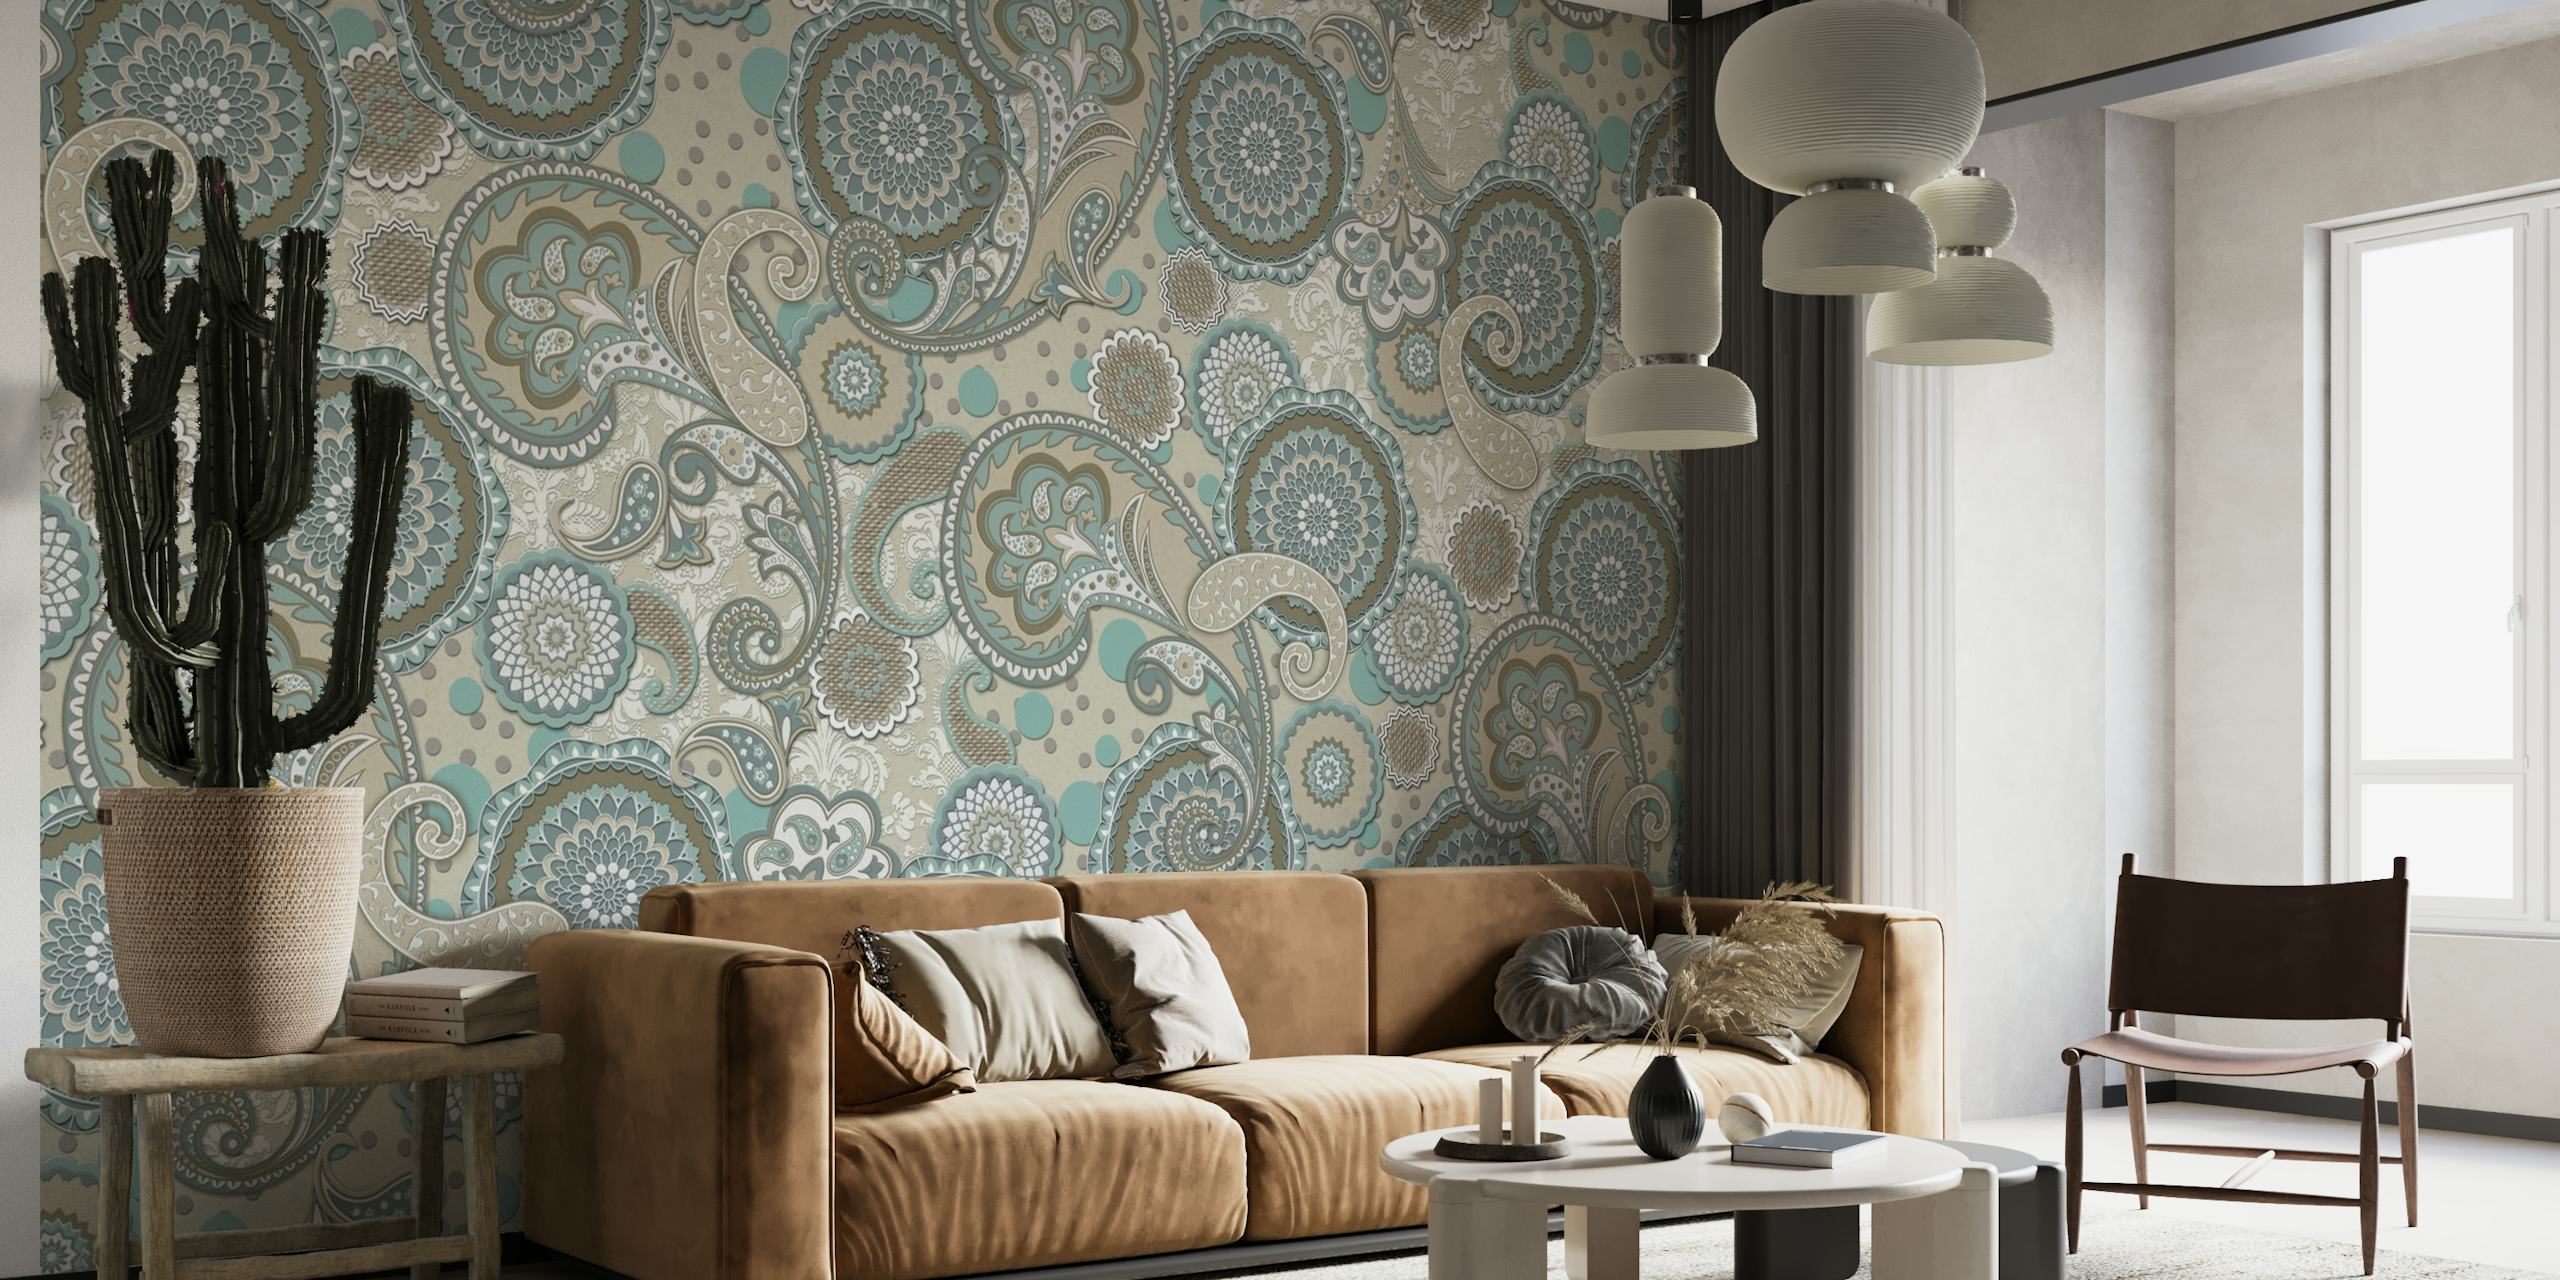 Blue and beige paisley mandala wall mural creating an elegant and calming atmosphere